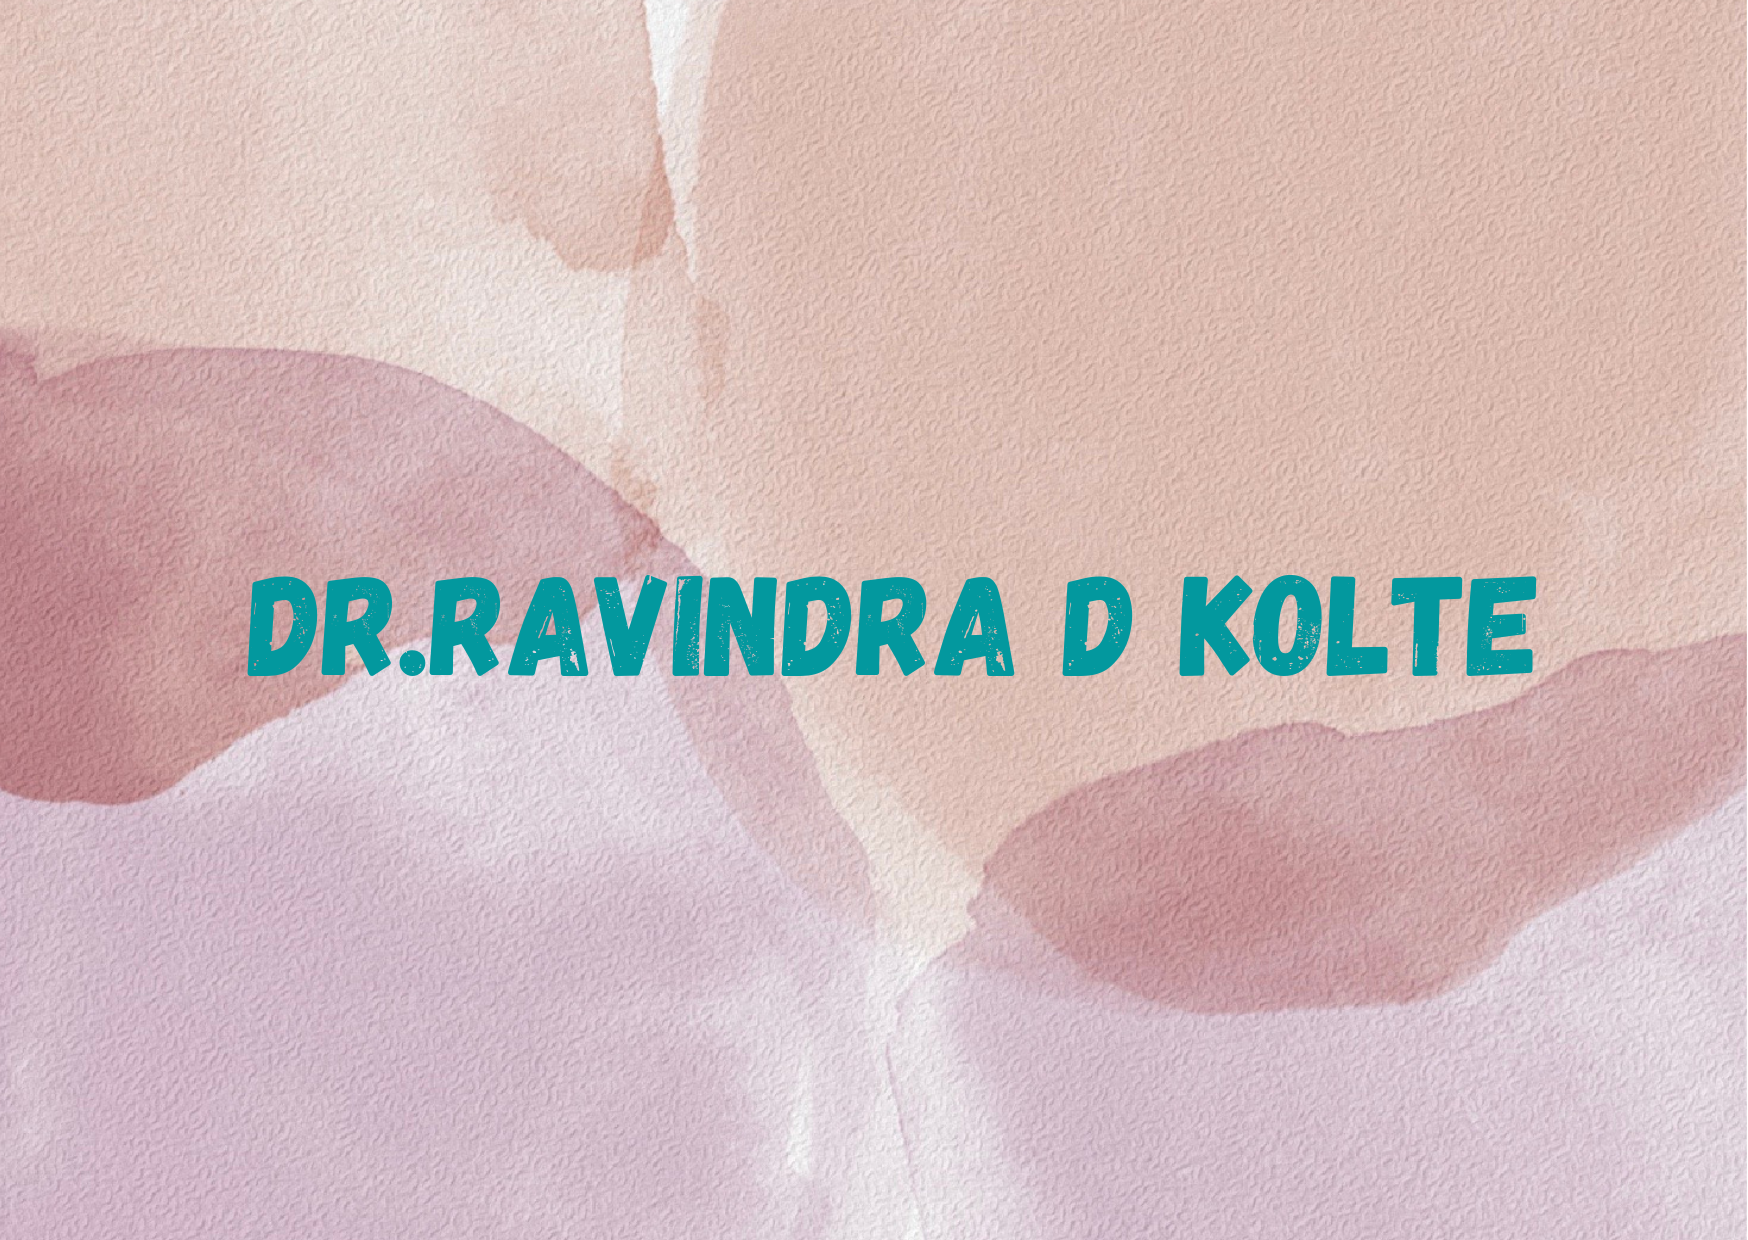 Kolte Dr Ravindra D 